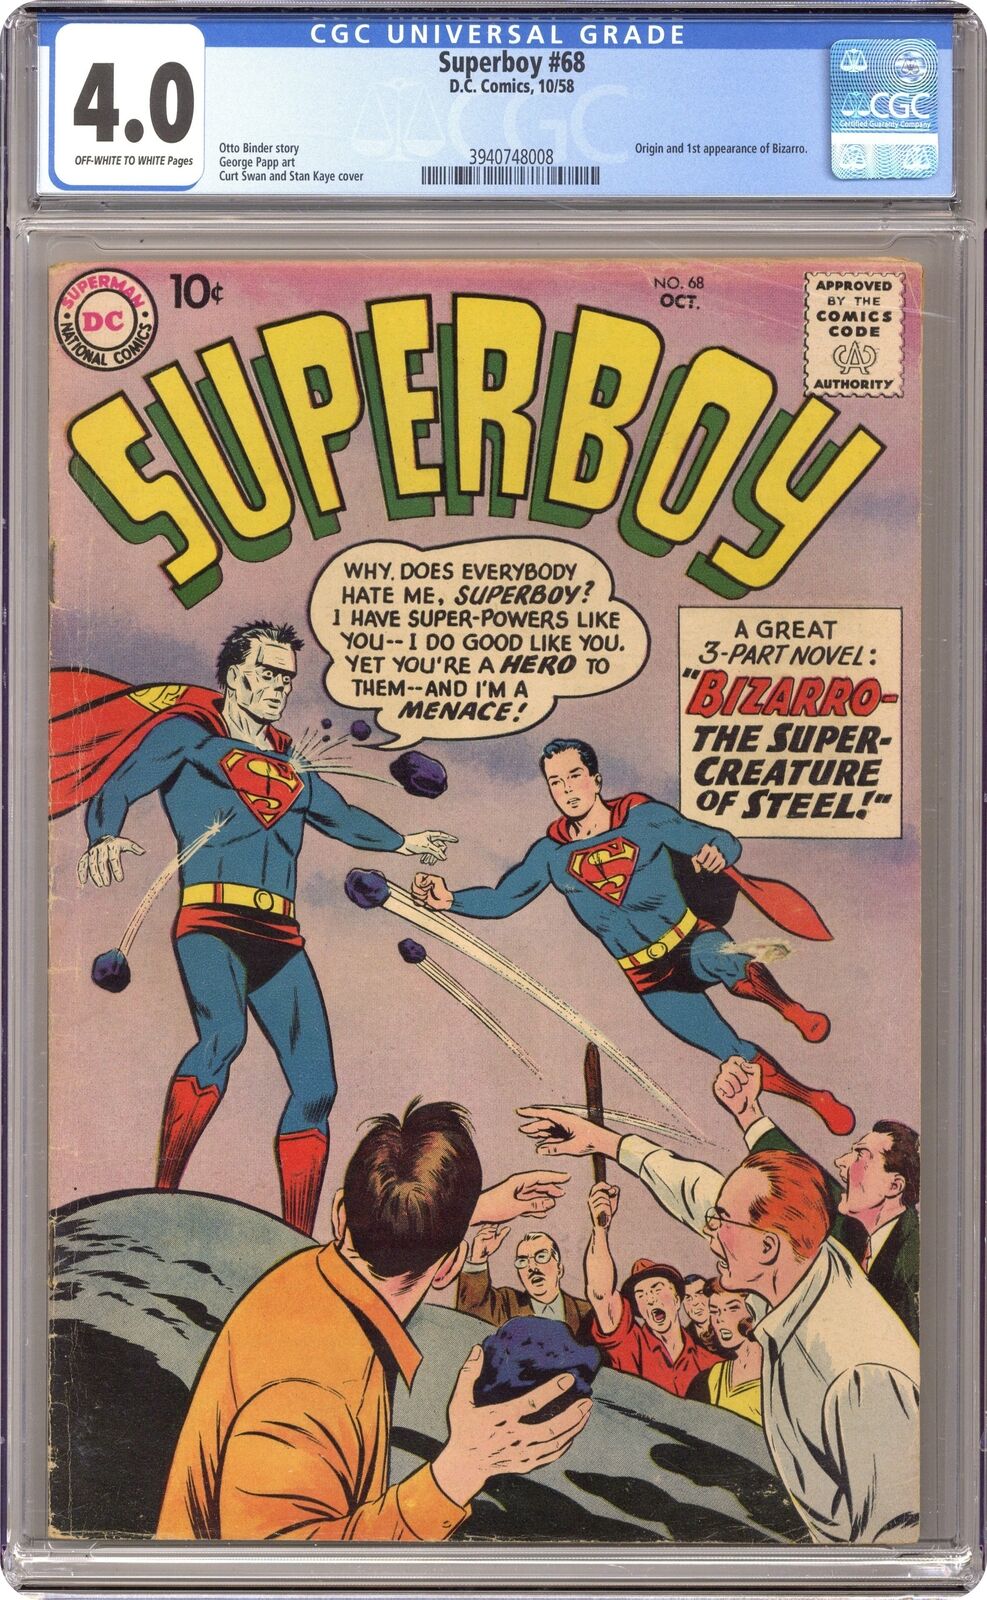 Superboy #68 CGC 4.0 1958 3940748008 1st app. Bizarro